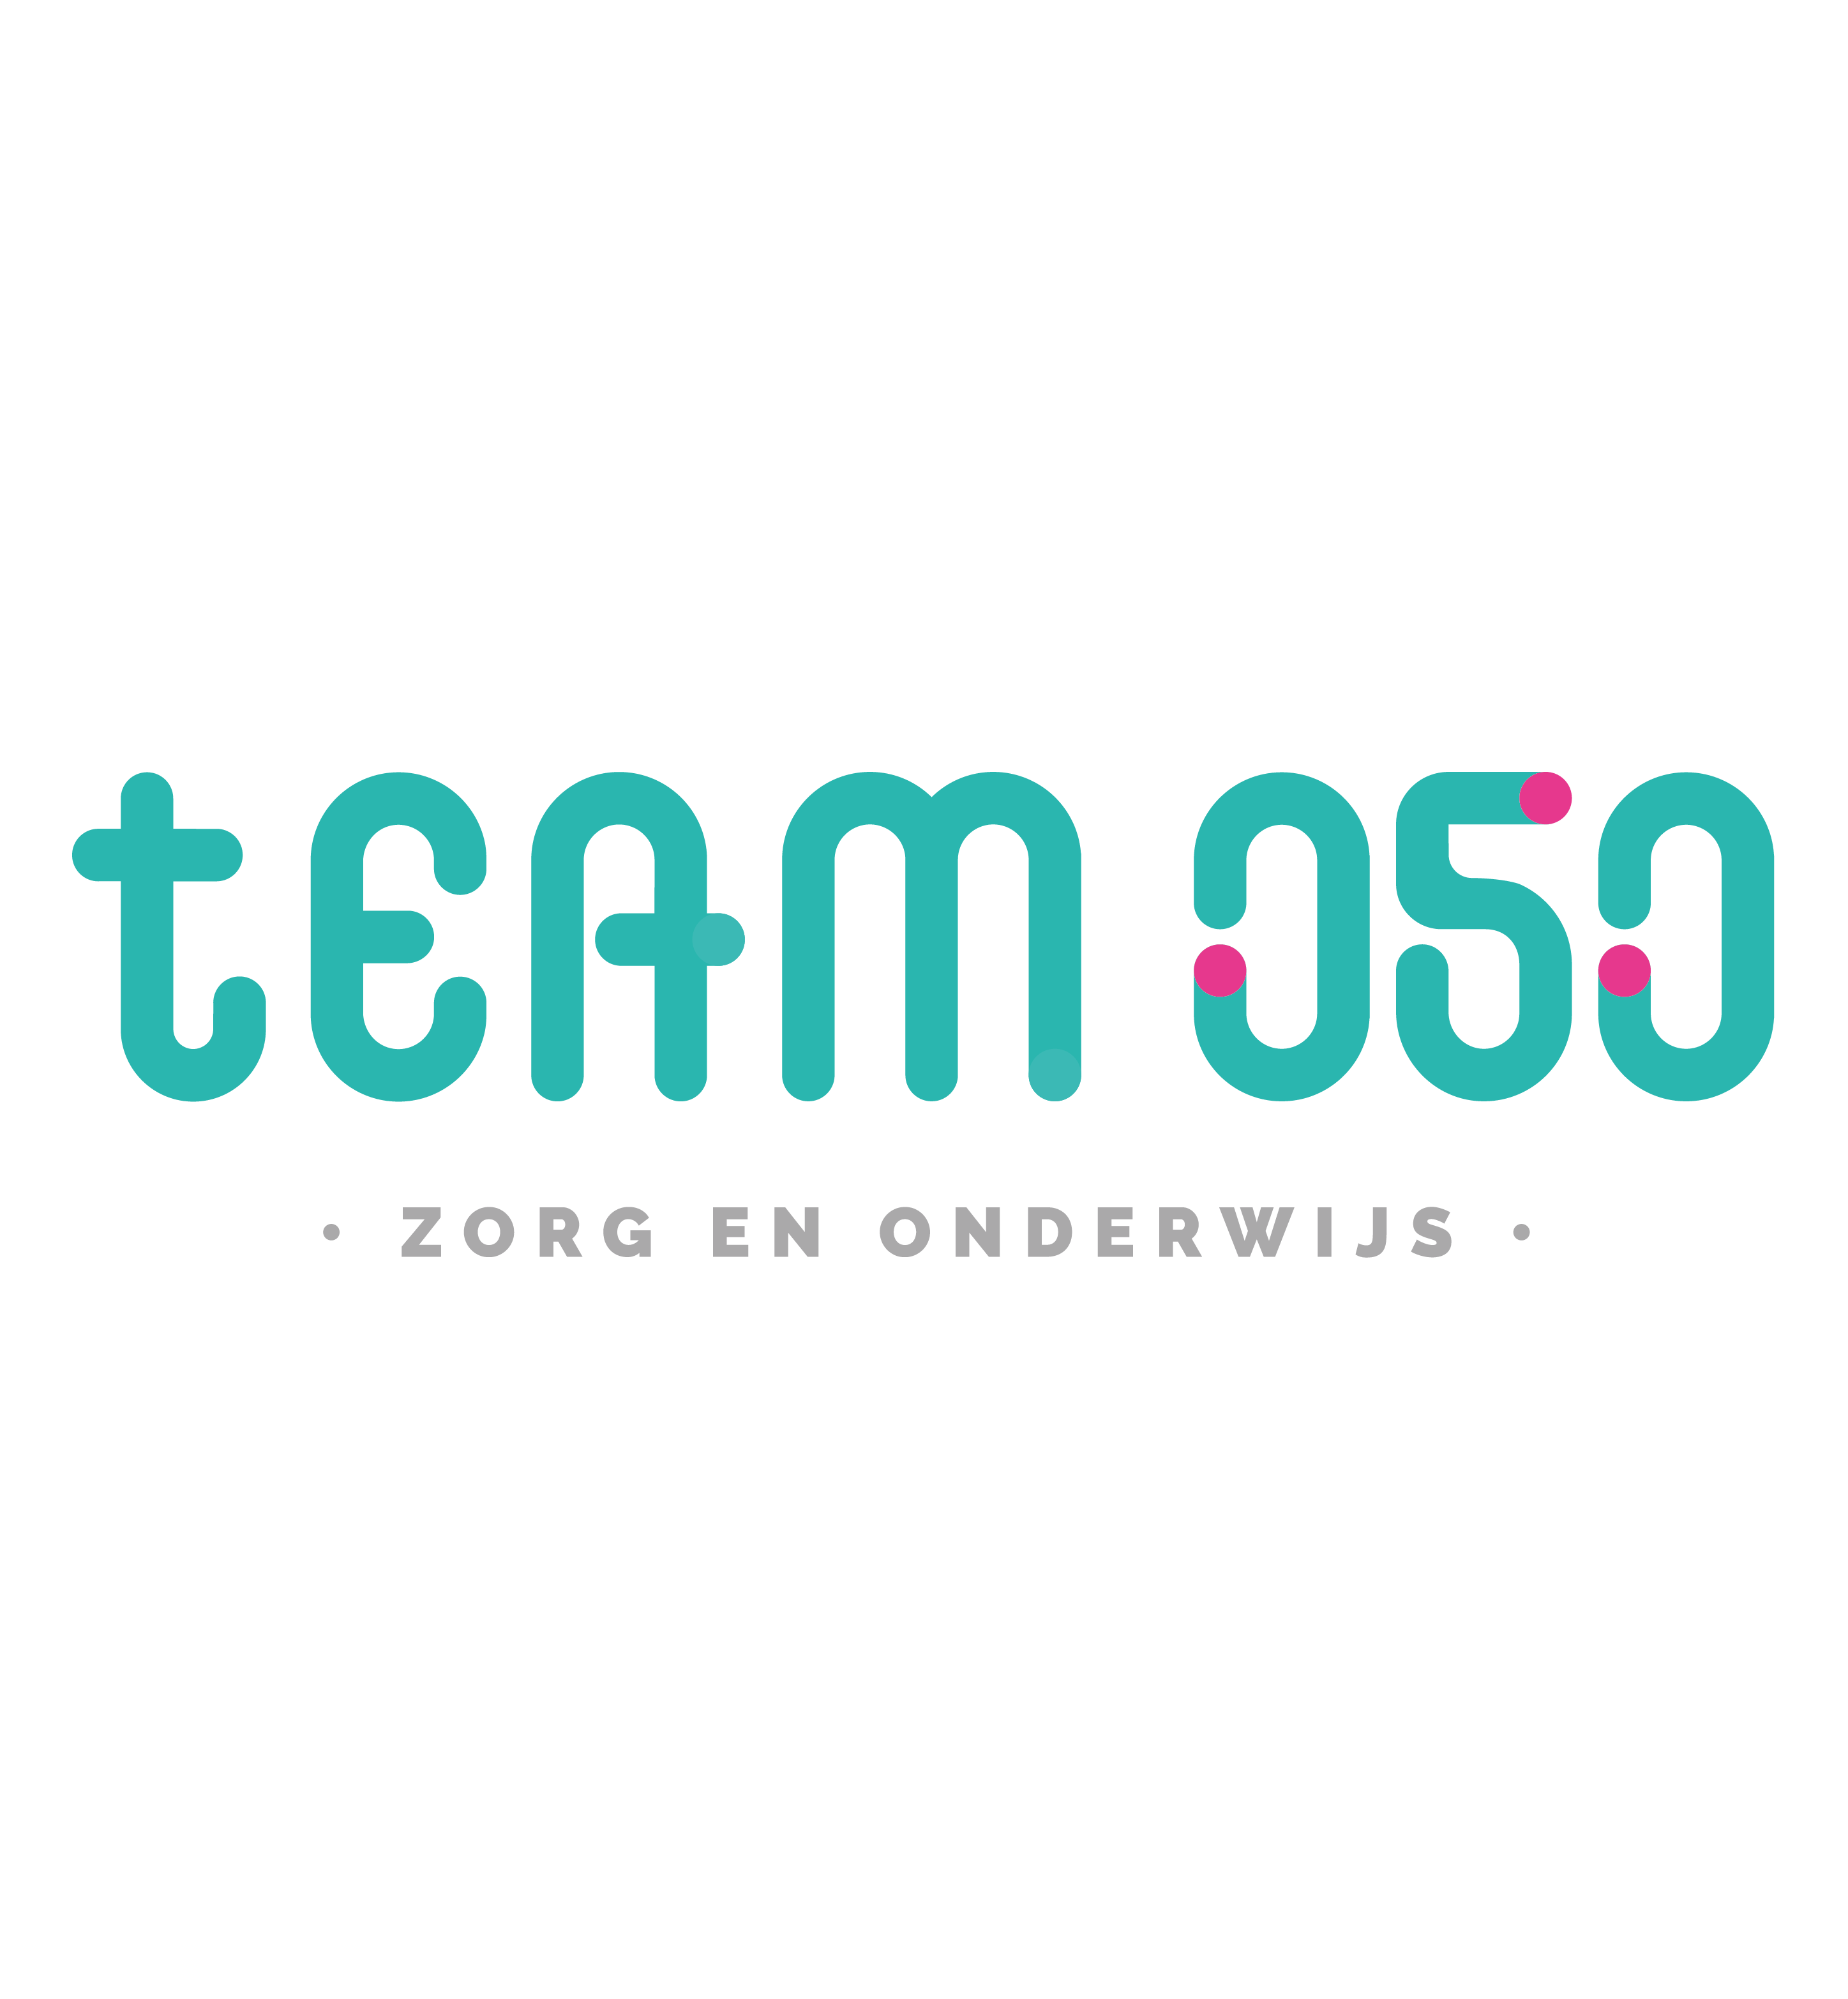 Team050